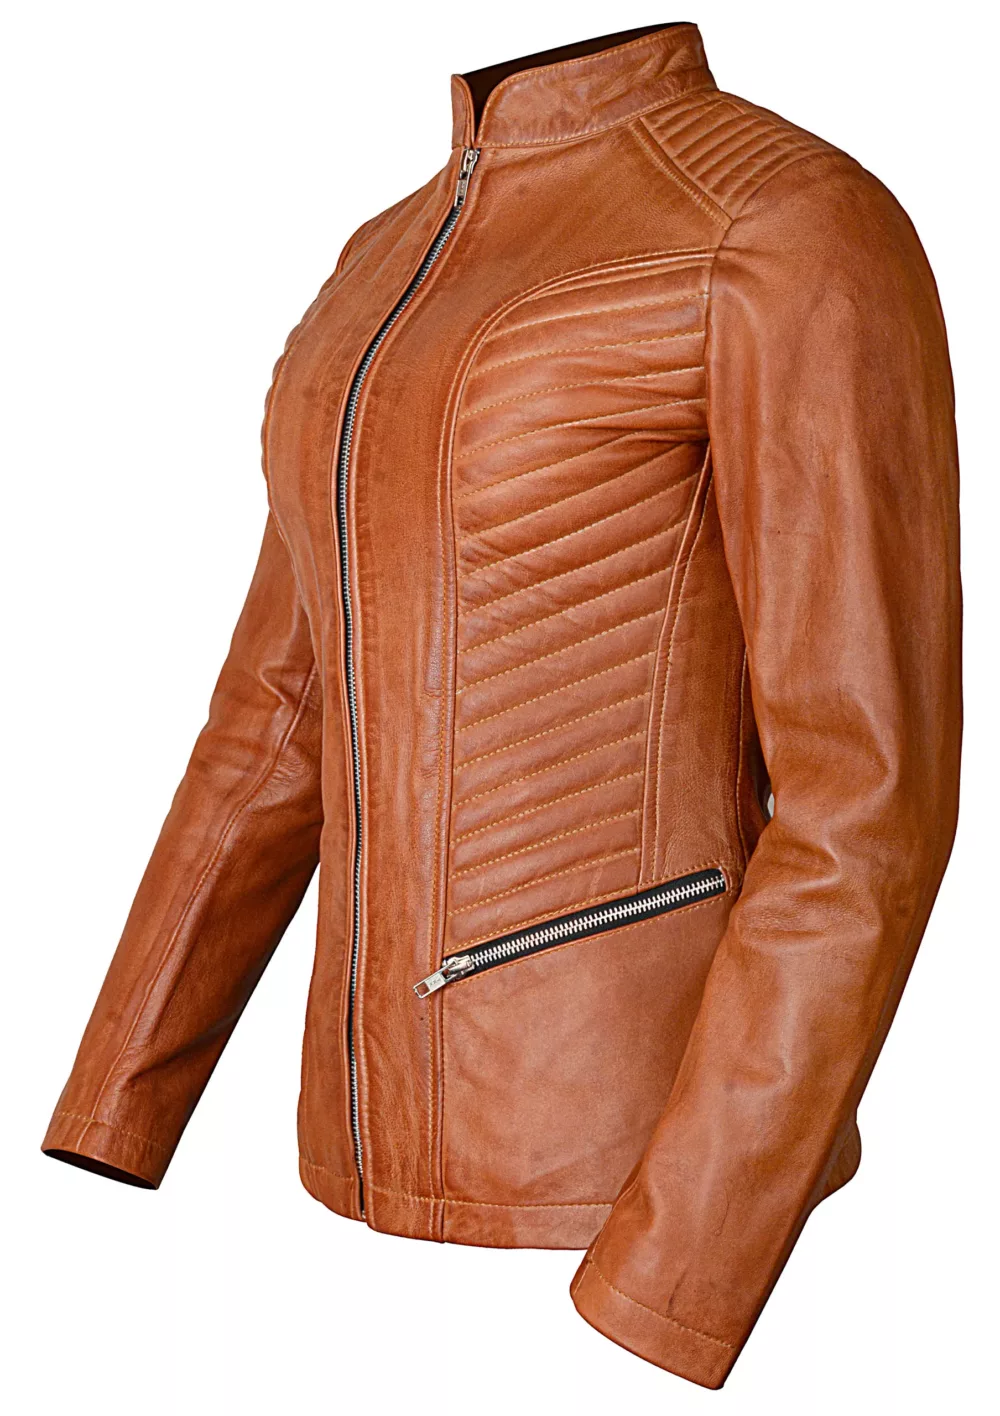 Women's Biker Style Casual Brown Leather Jacket